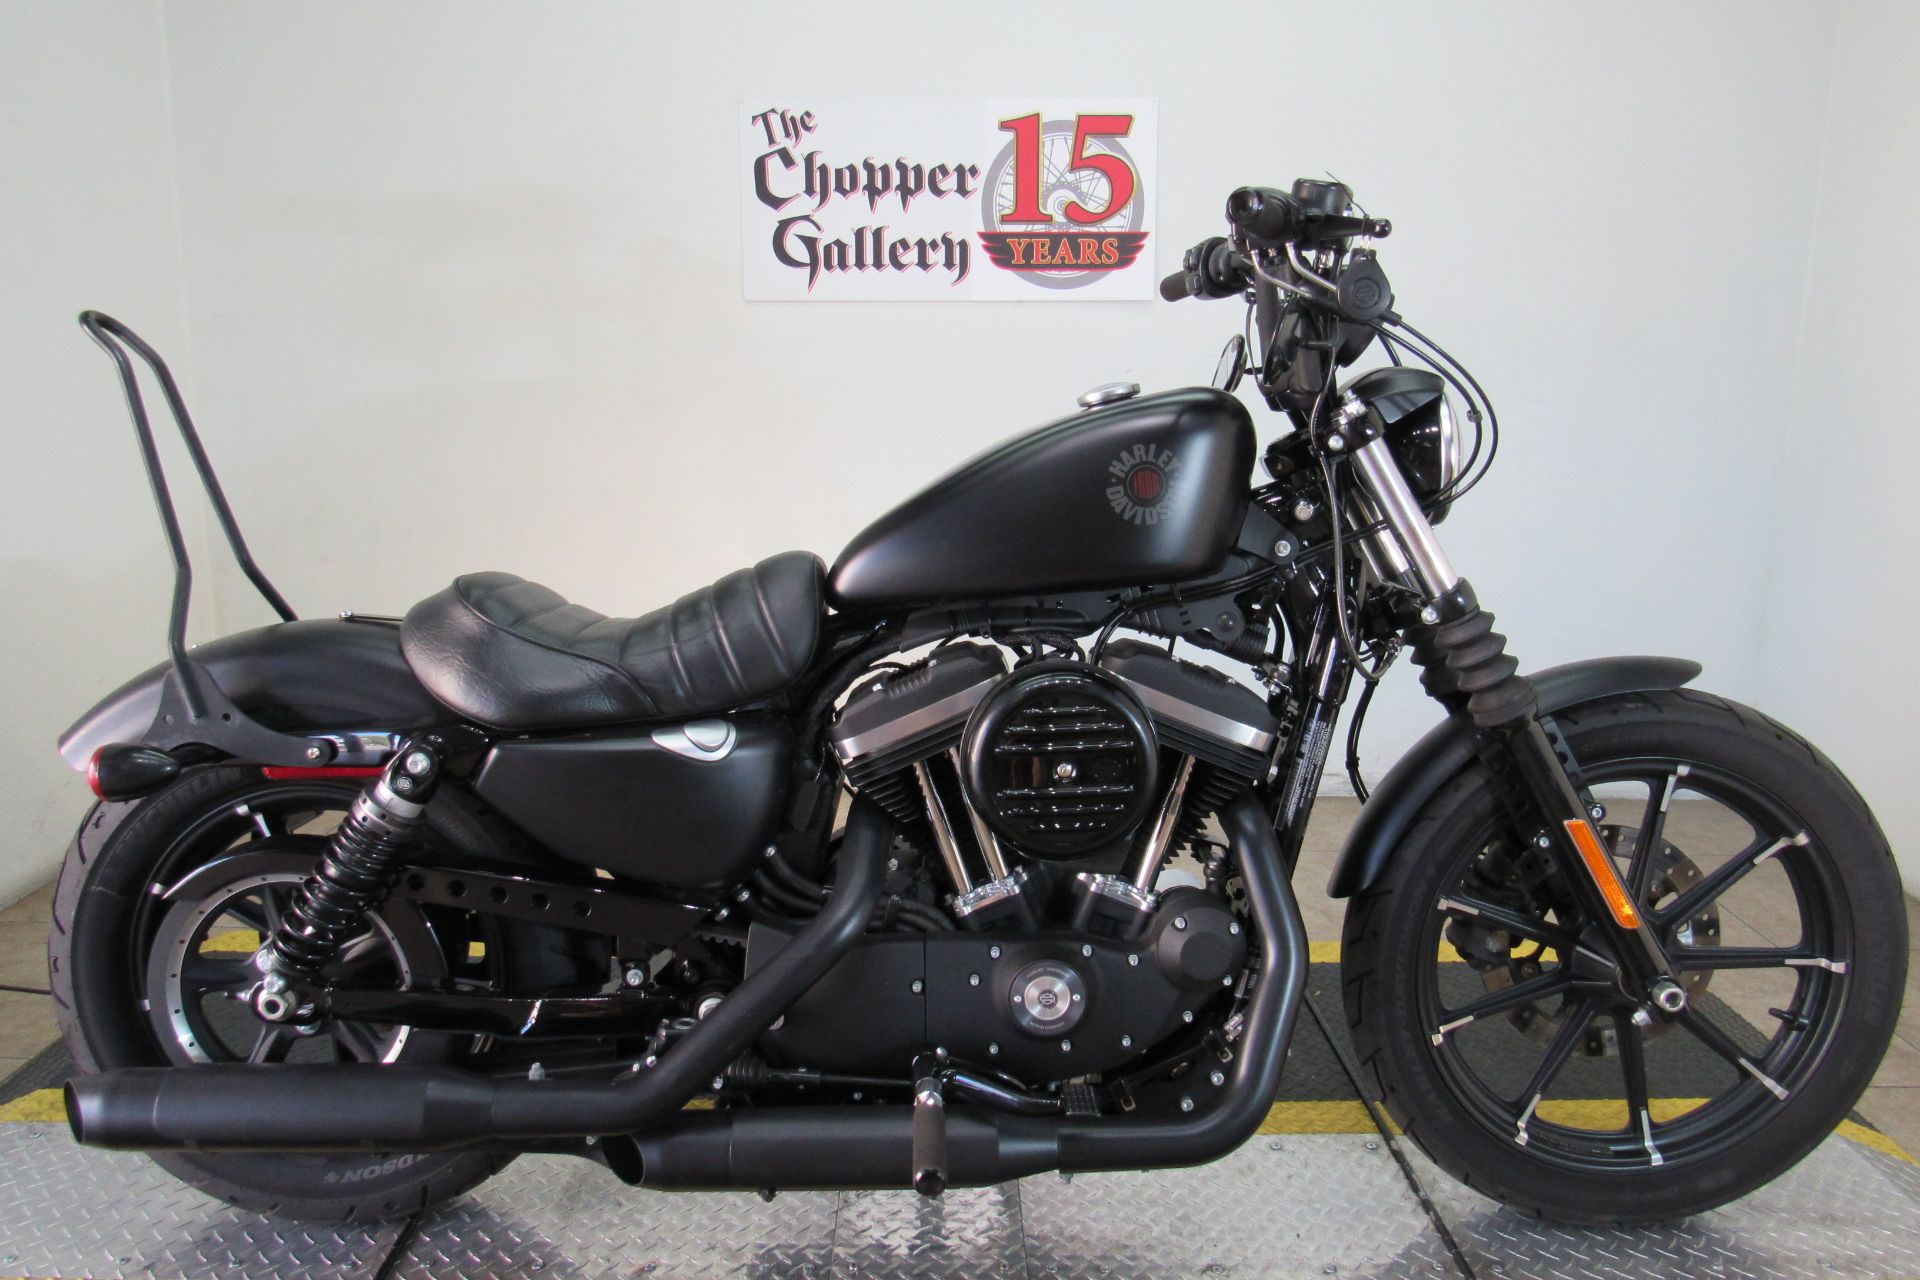 2019 Harley-Davidson Iron 883™ in Temecula, California - Photo 1